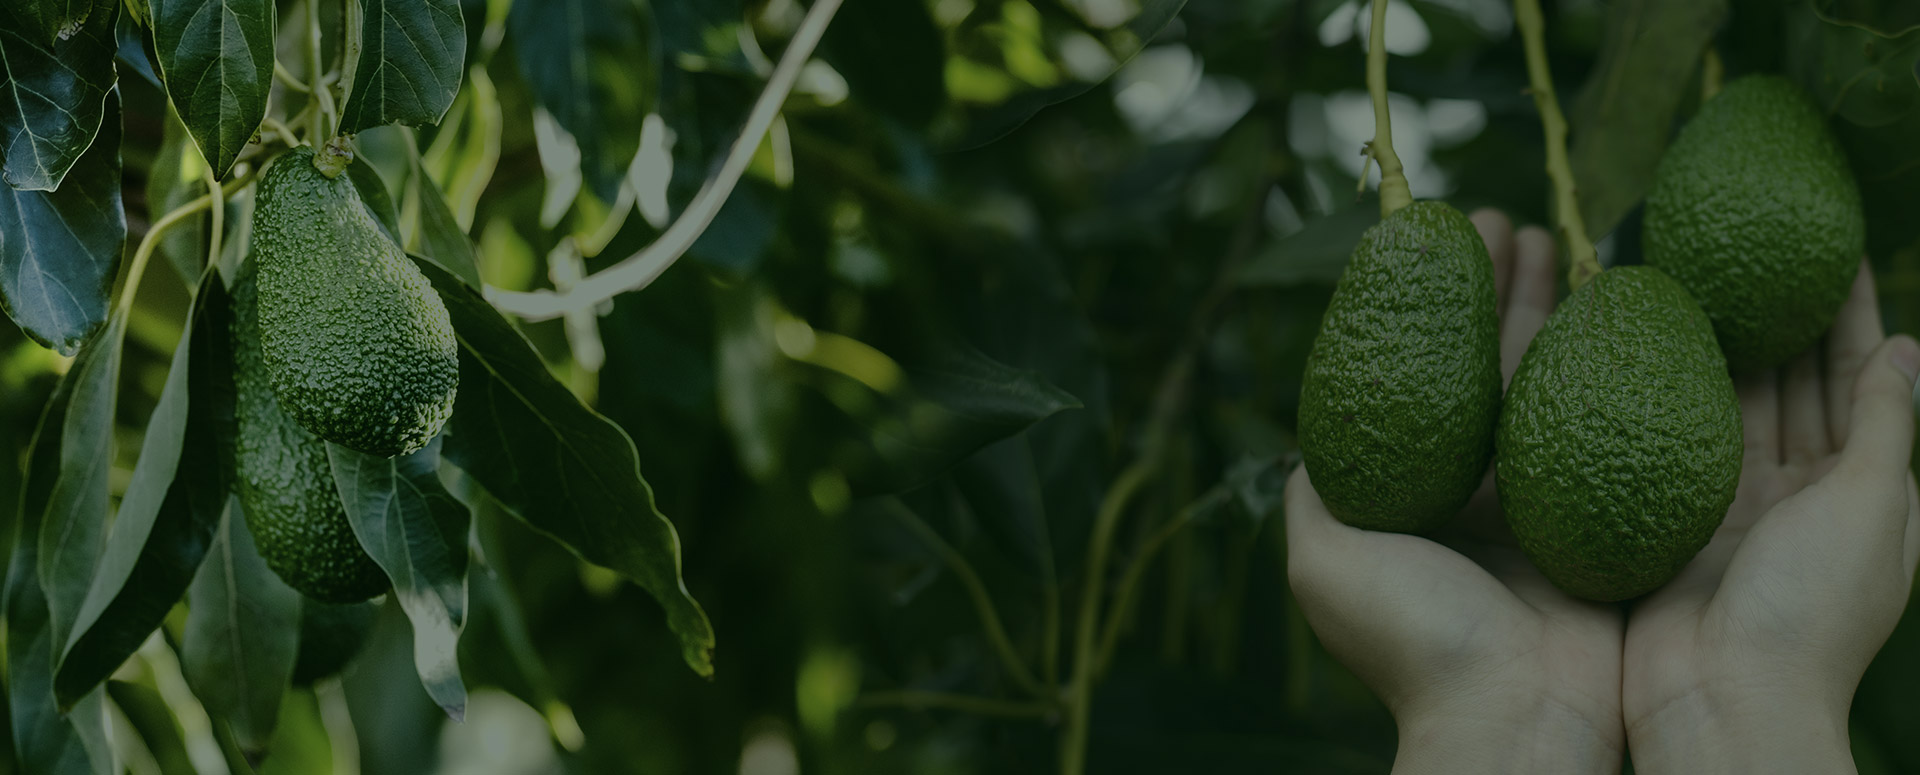 Avocado and mango production